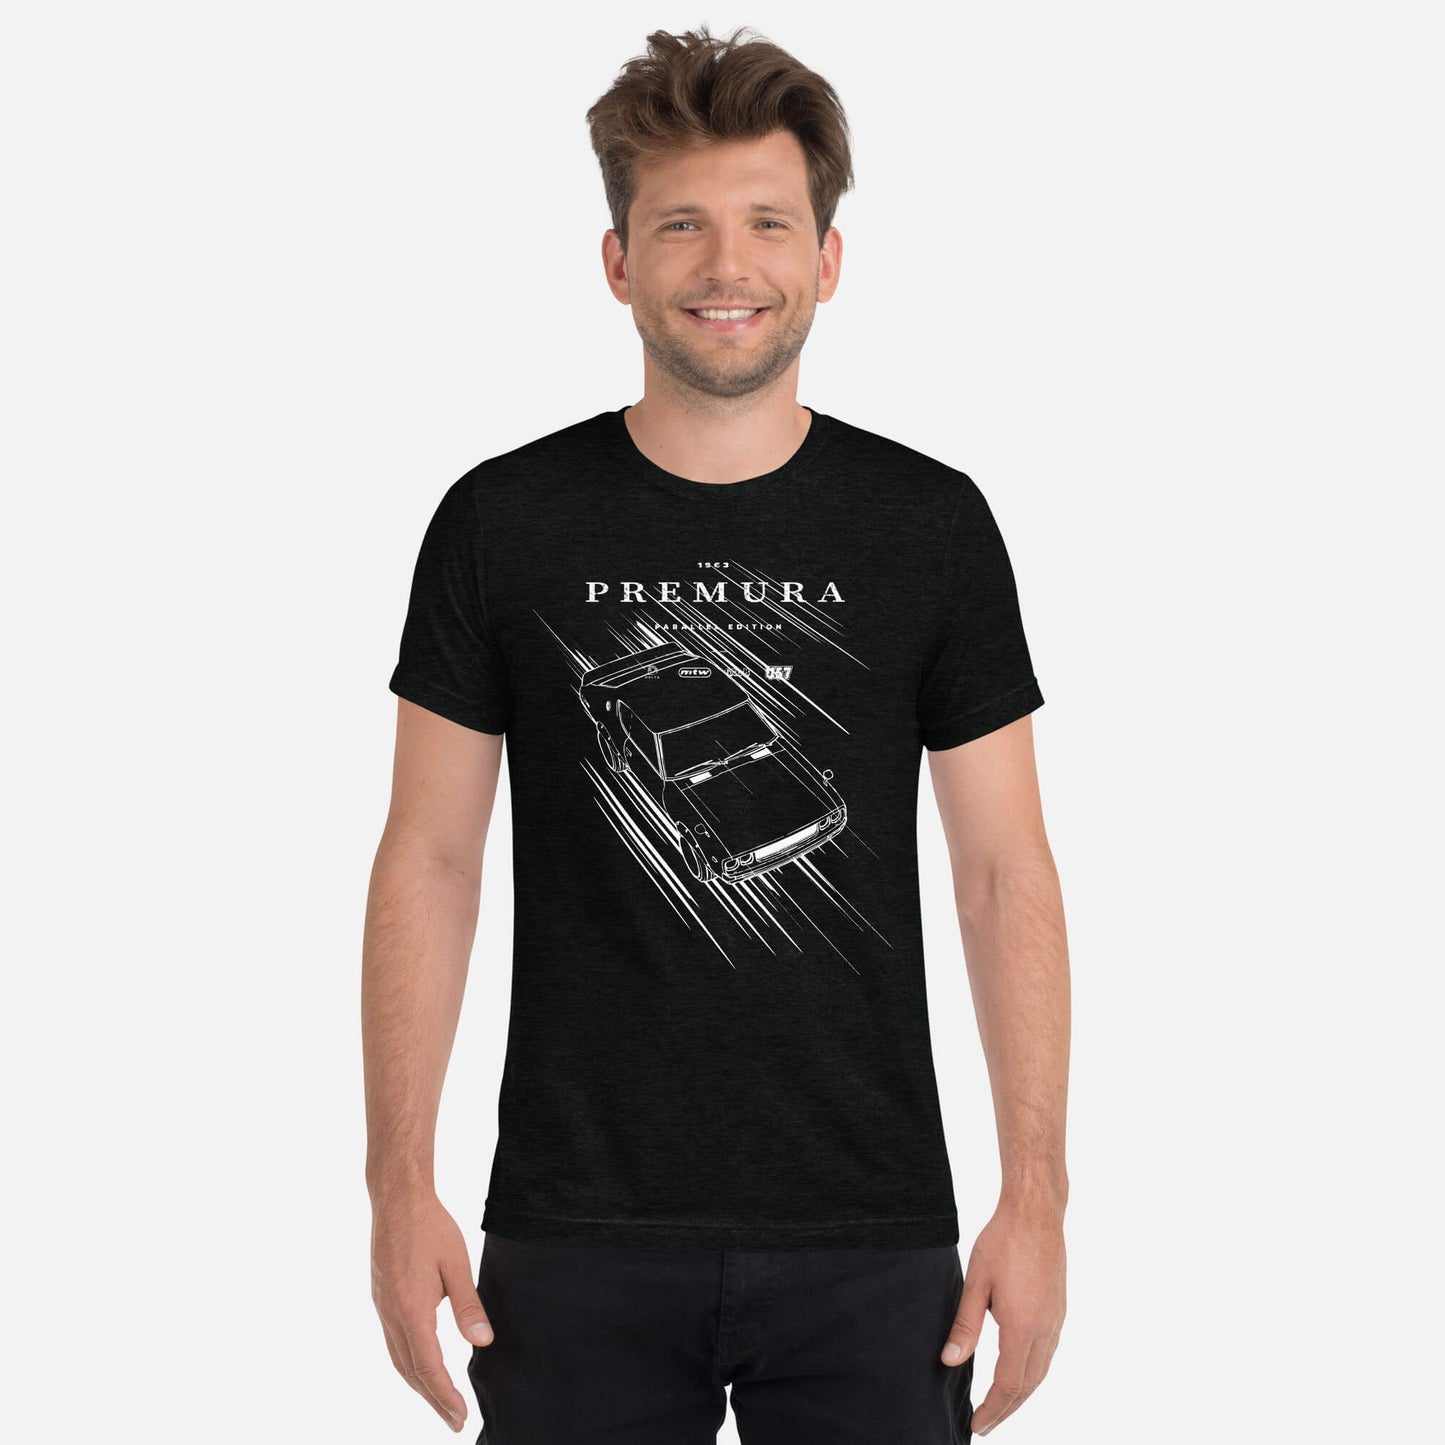 Premura - T-Shirt Unisex Black